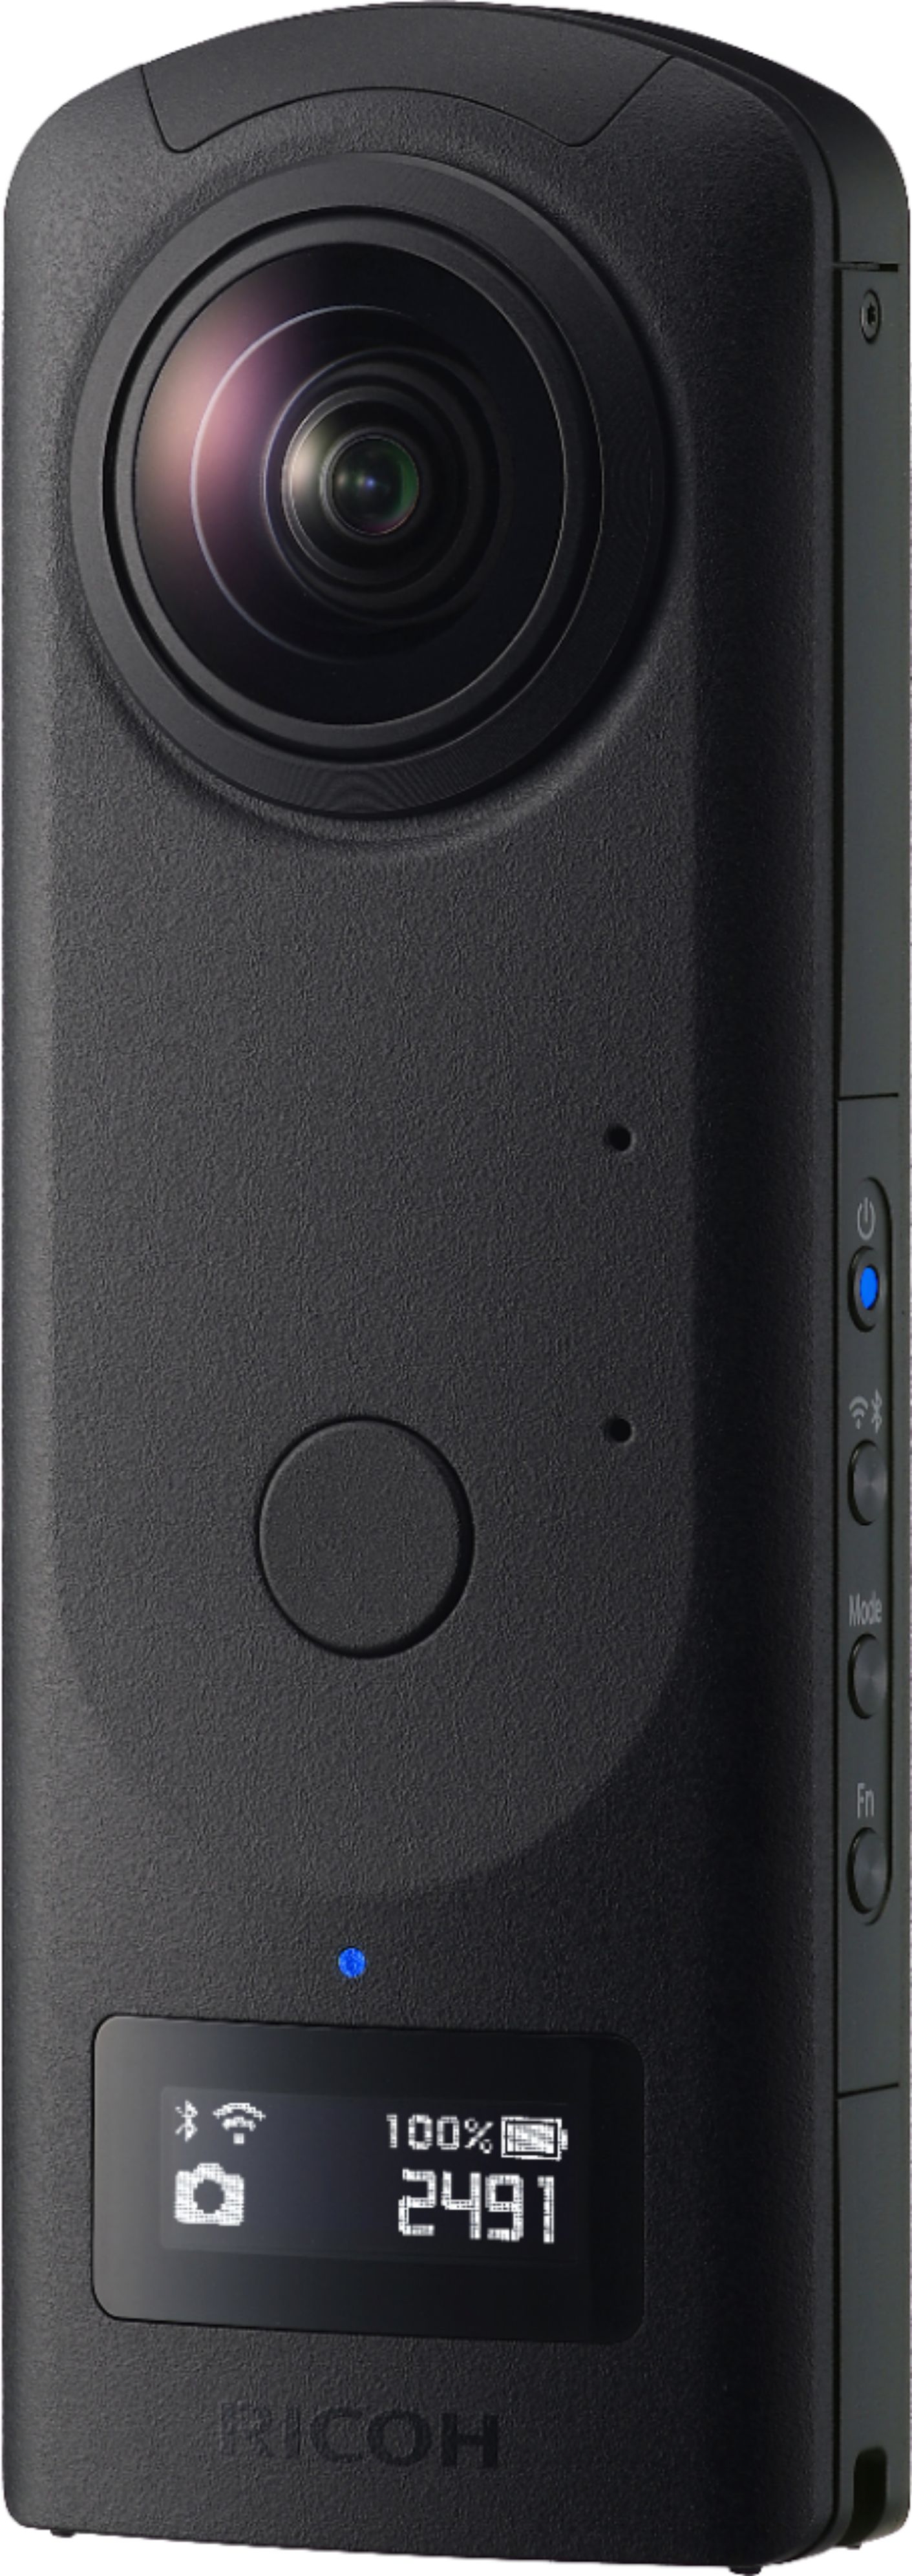 Theta Z1 51GB Black 910830 - Best Buy